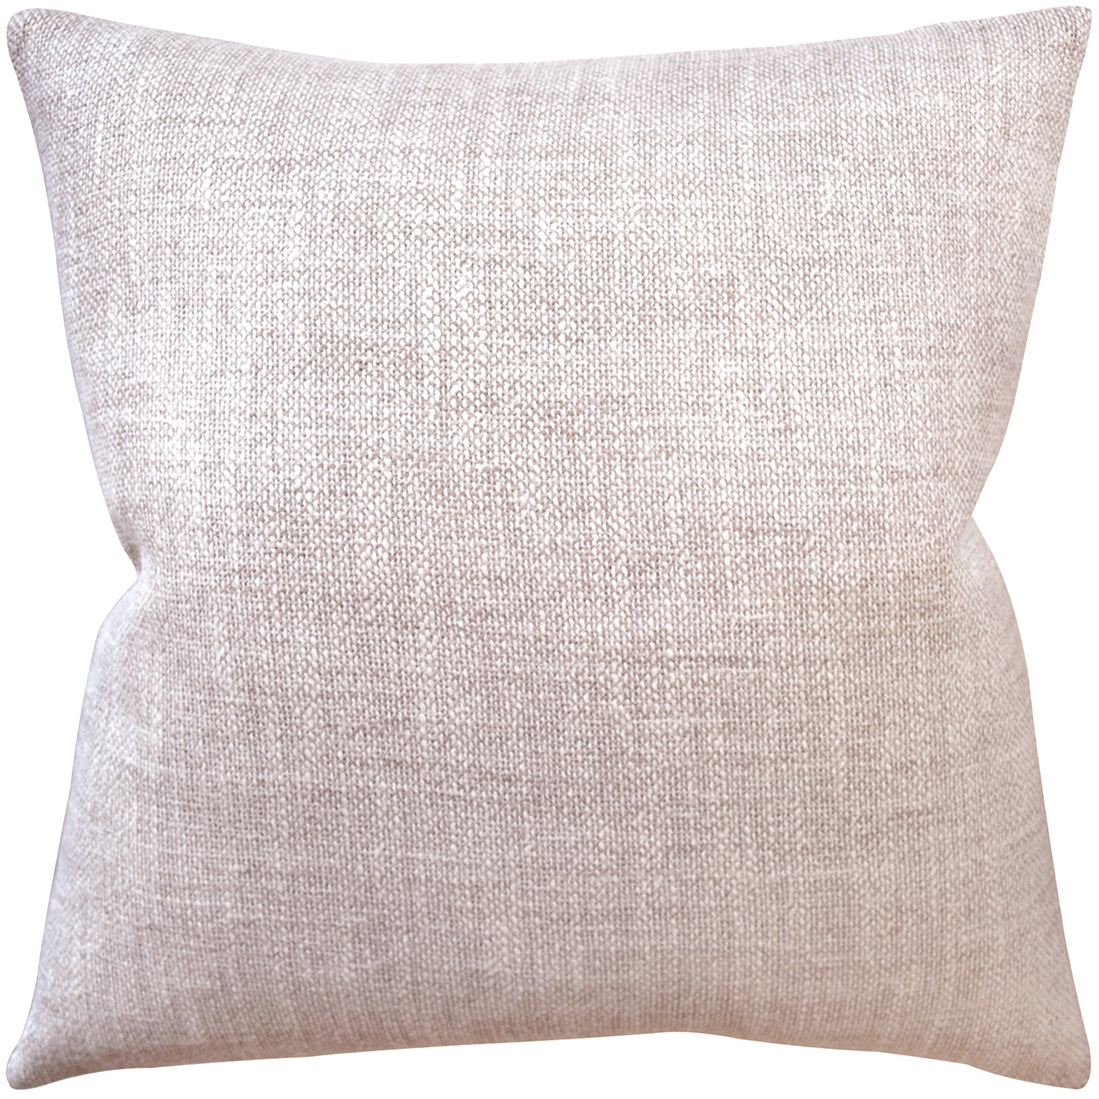 Amagansett Pillow in Blush